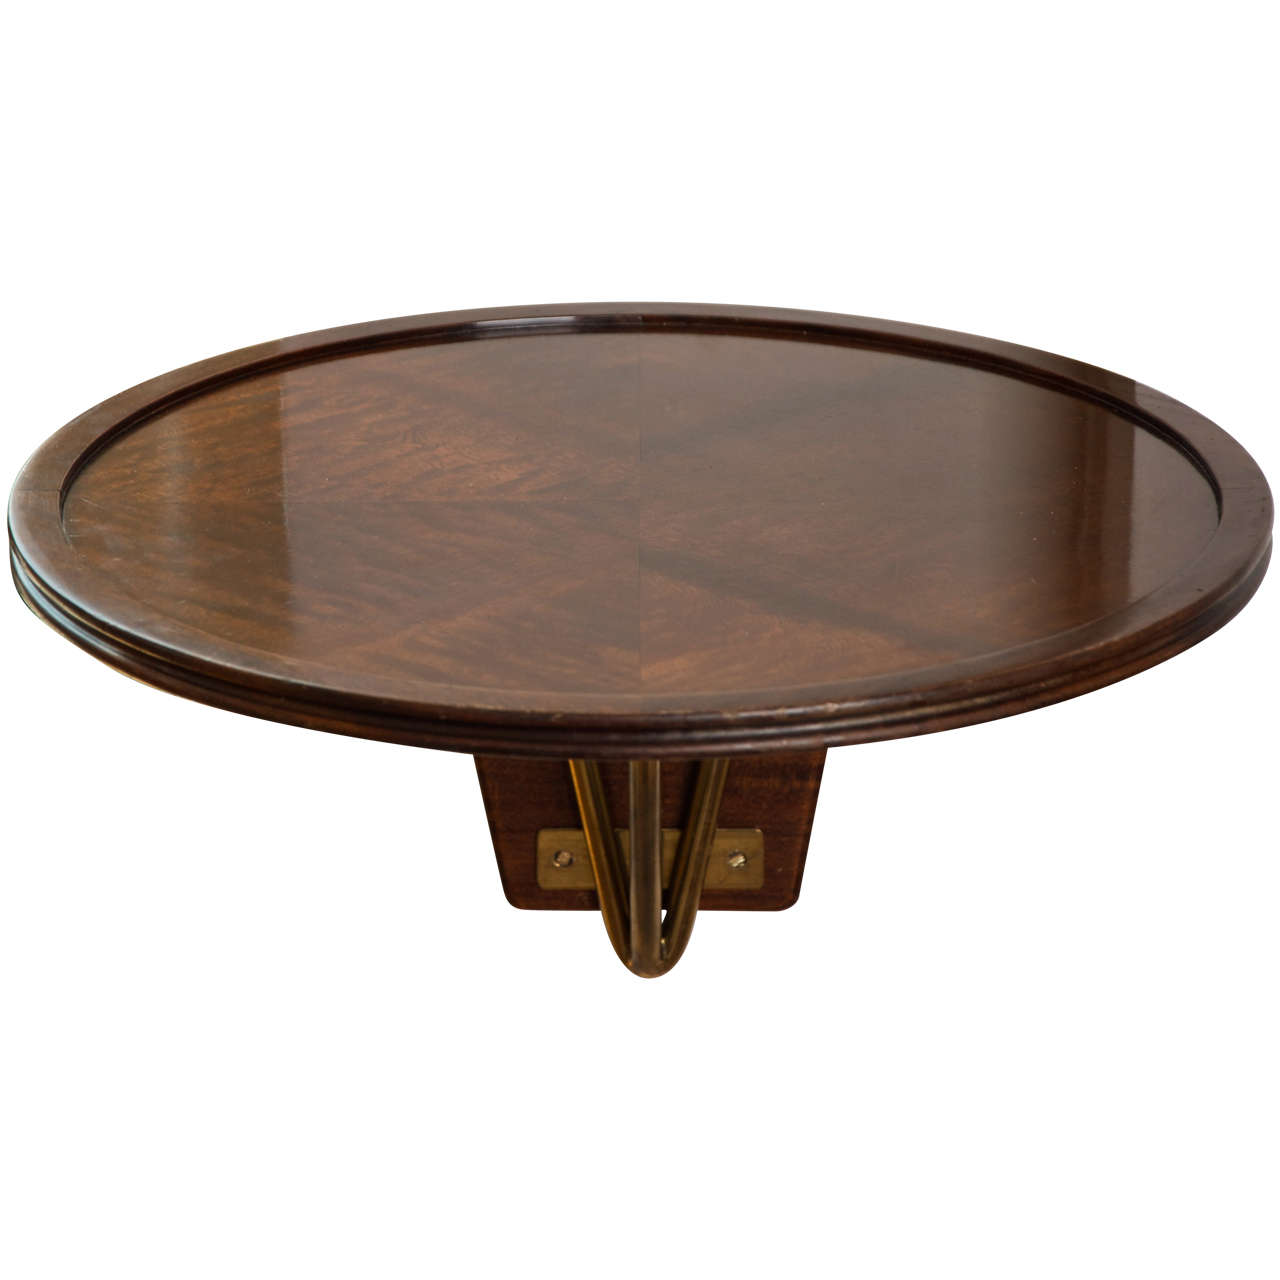 1940s Italian mahogany circular wall-mounted console table